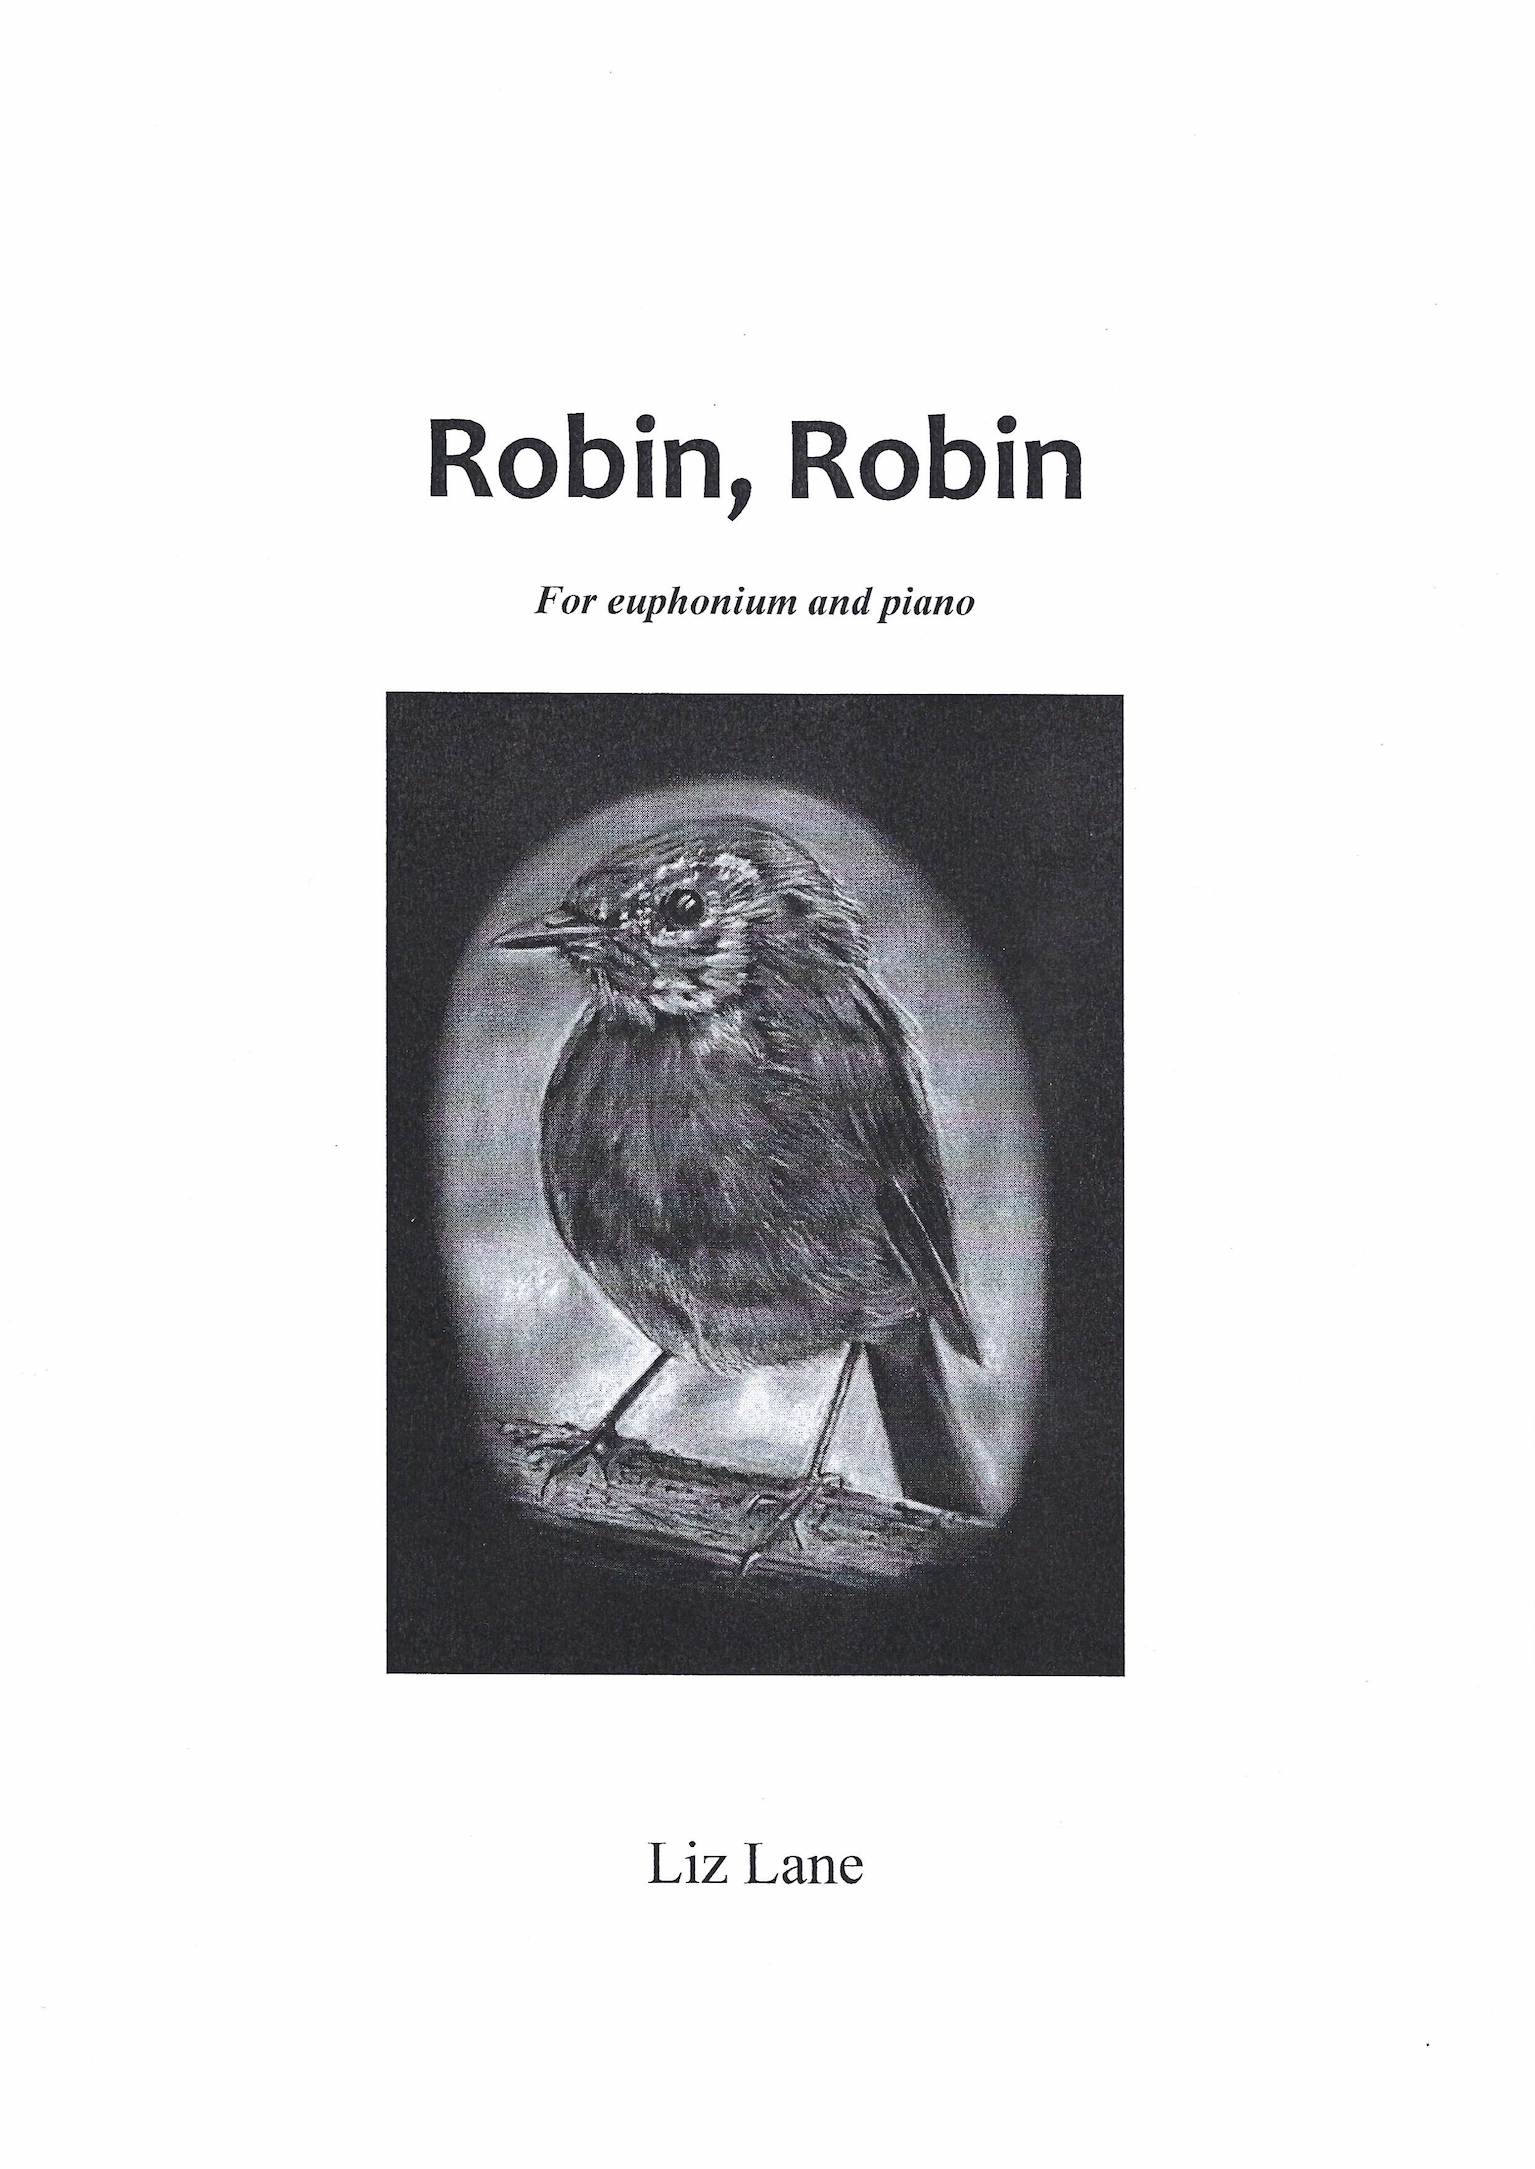 Robin Robin - Liz Lane - Euphonium and Piano (TC solo part)